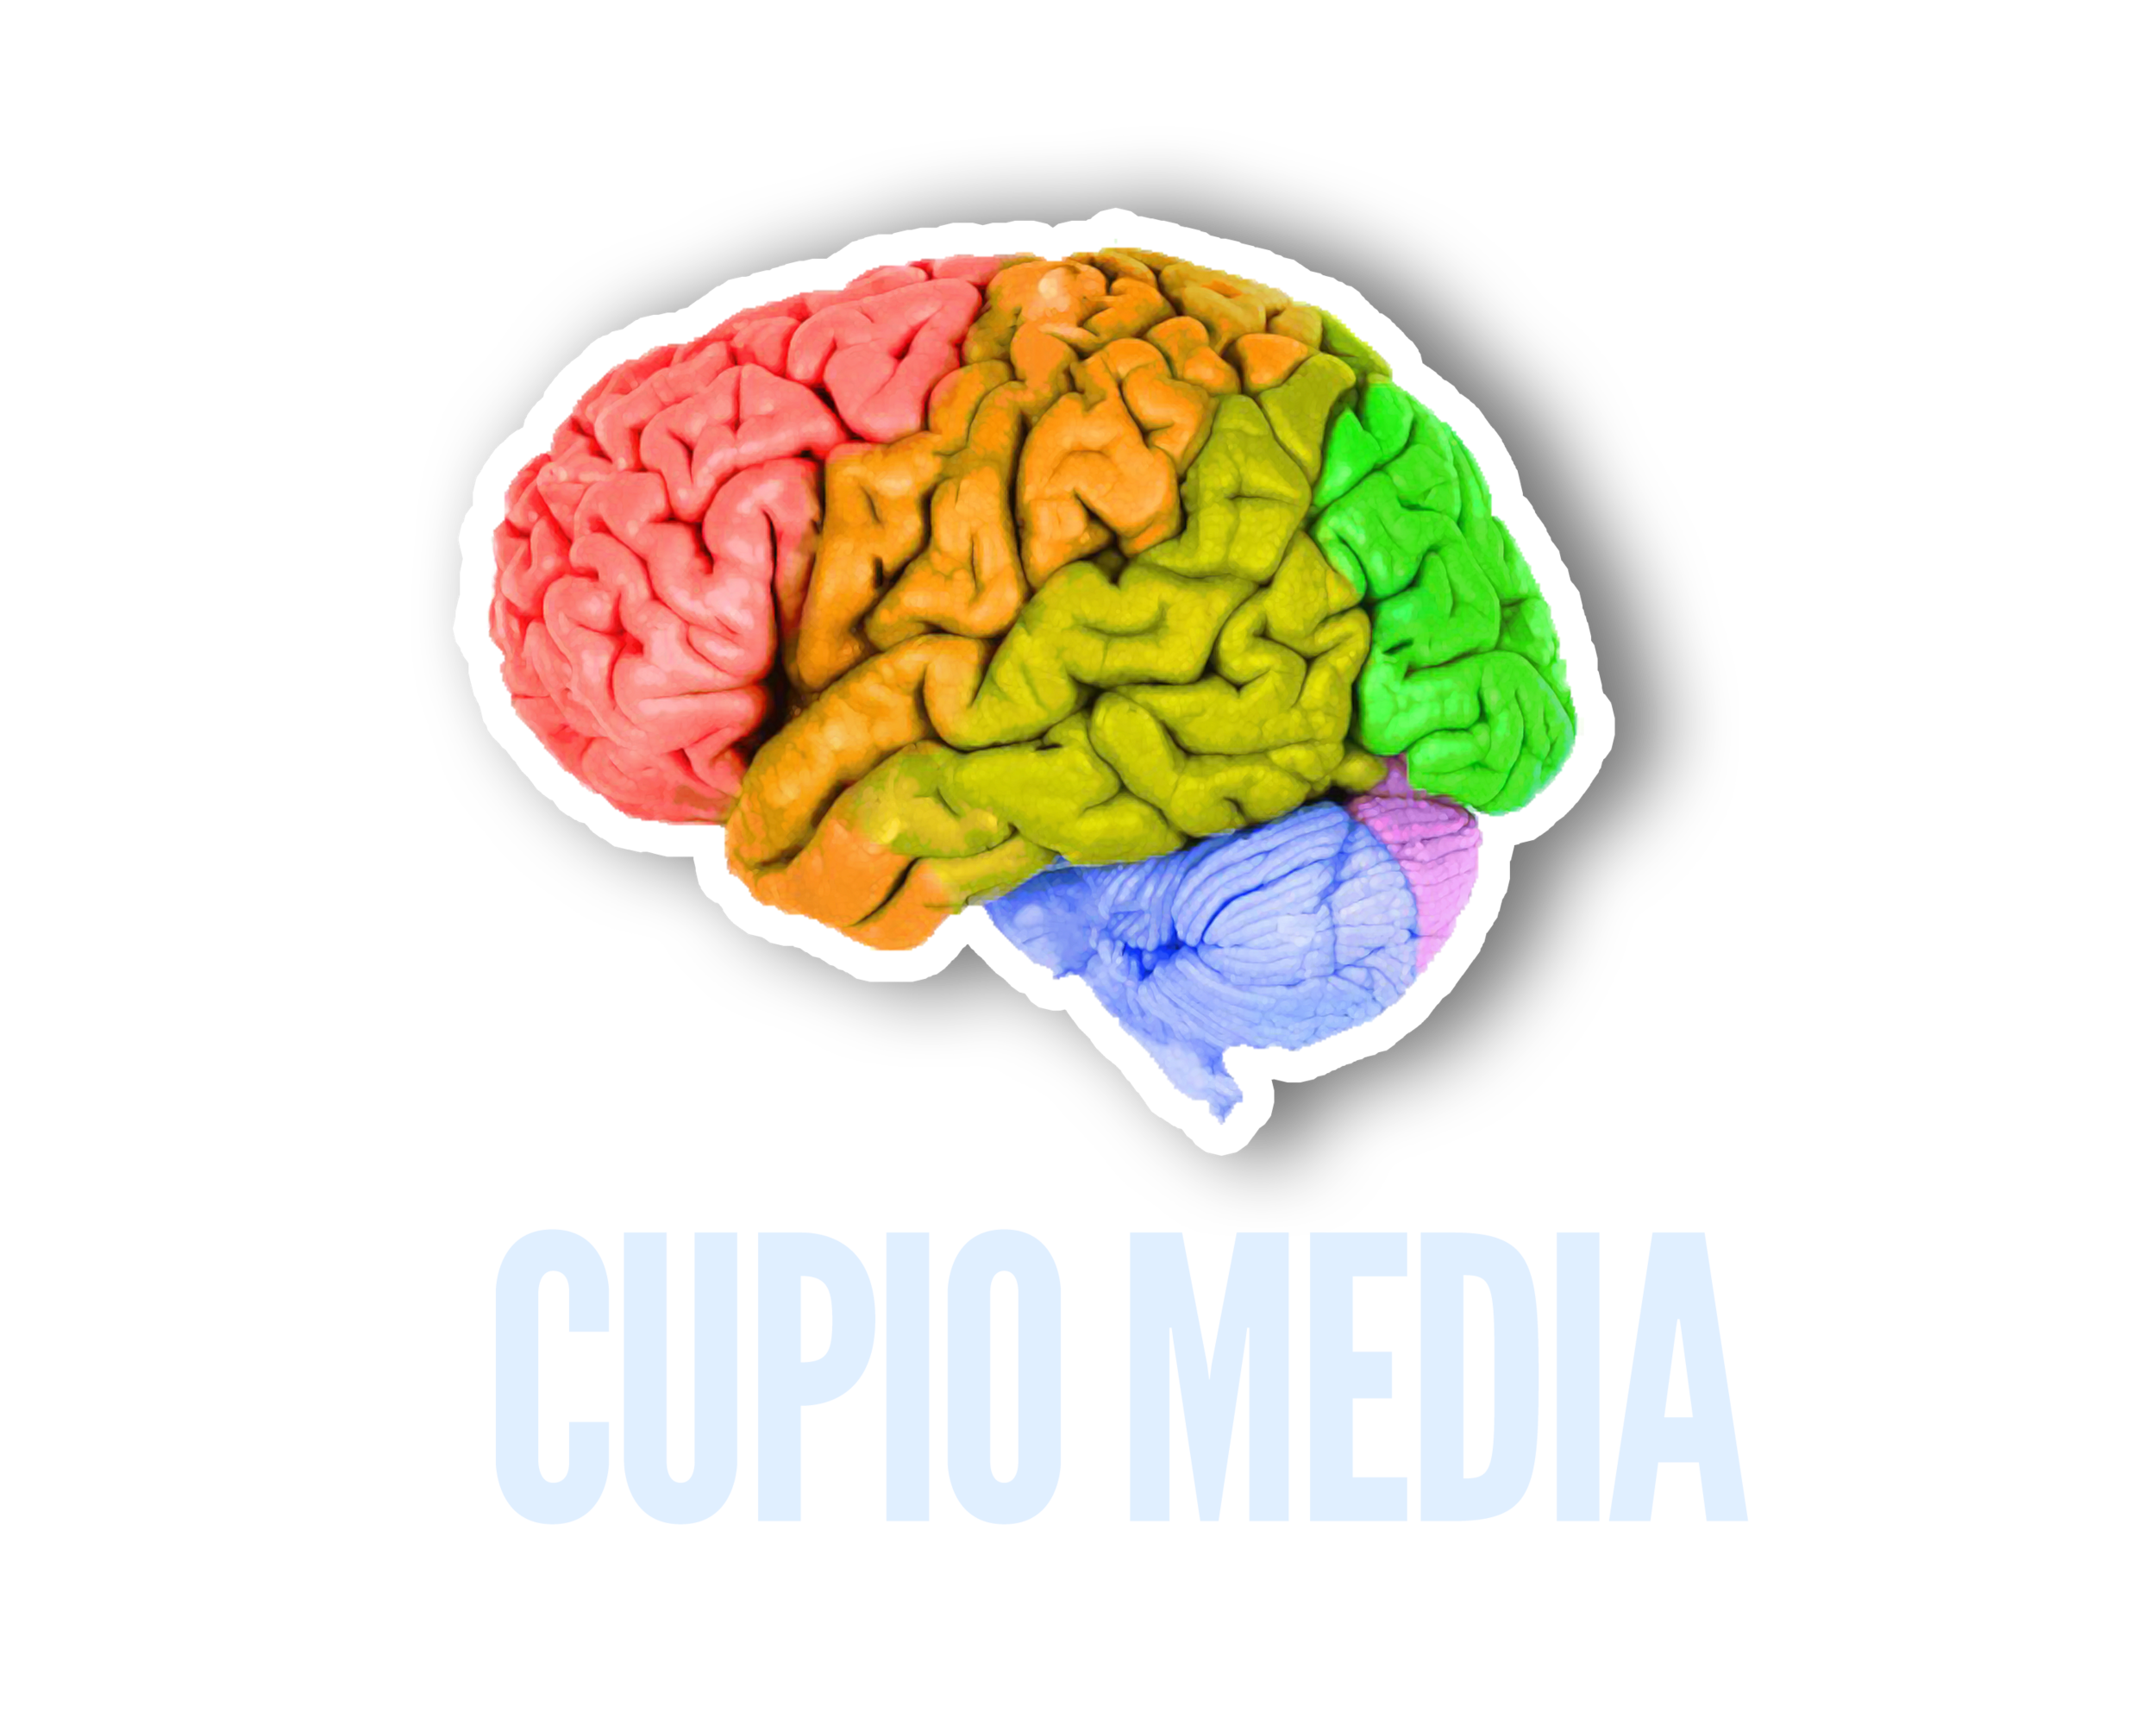 Cupio Media